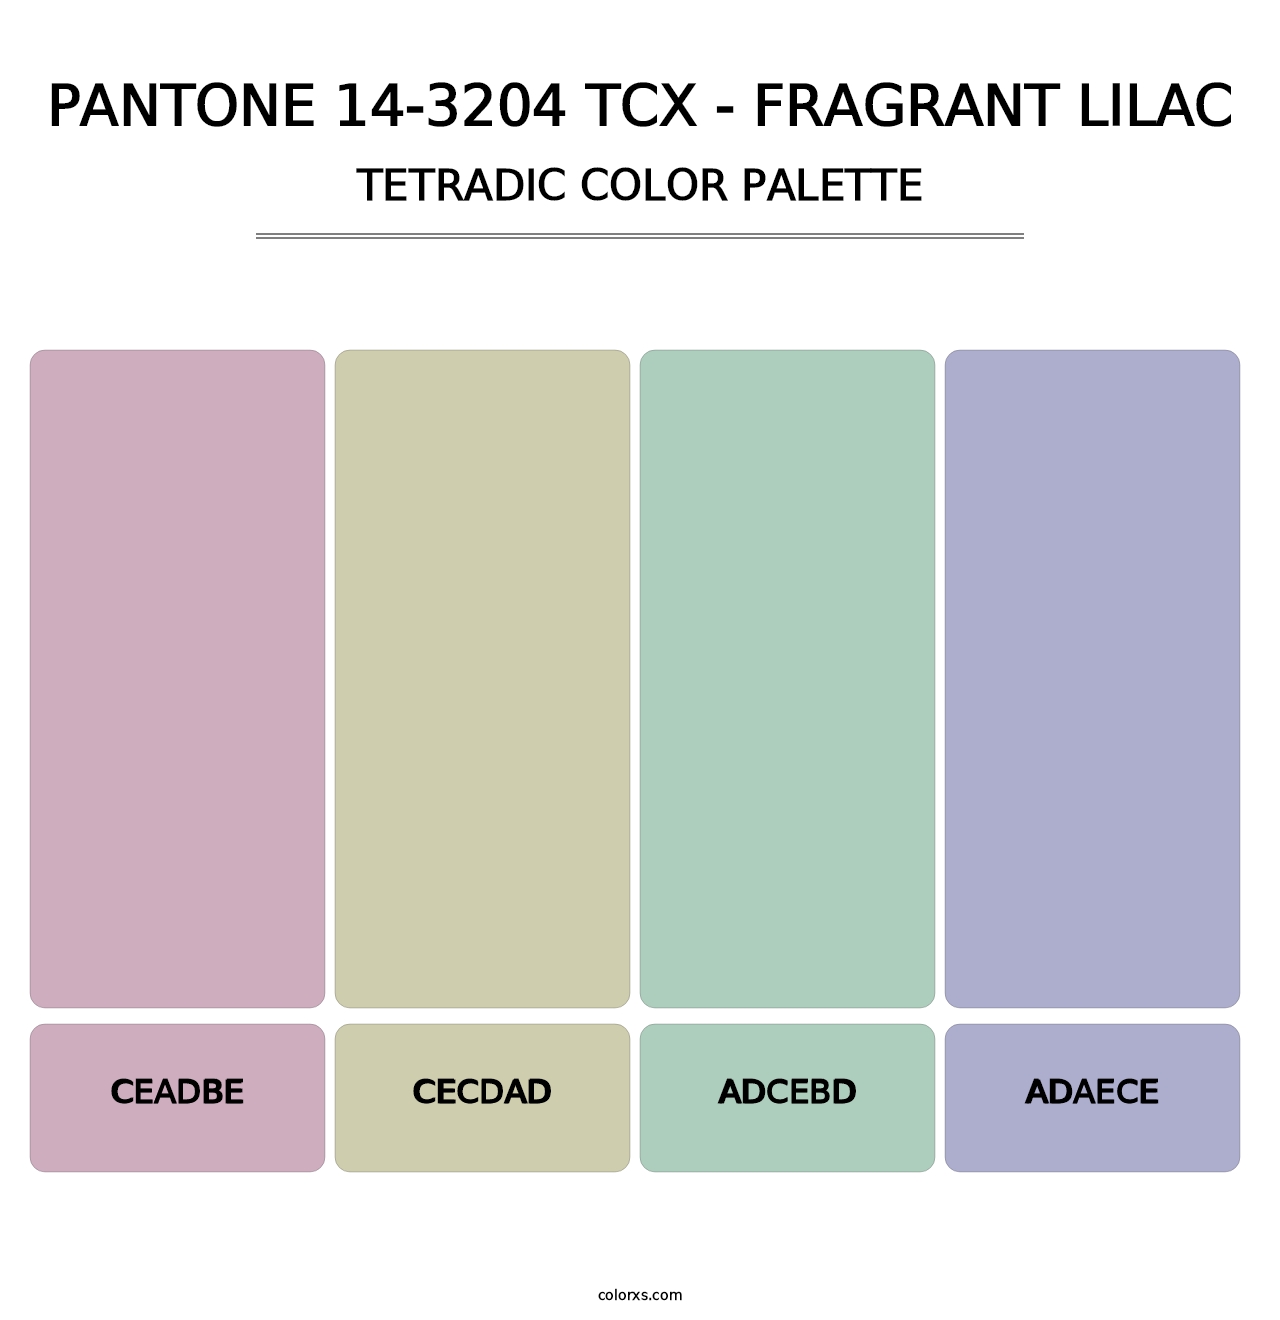 PANTONE 14-3204 TCX - Fragrant Lilac - Tetradic Color Palette